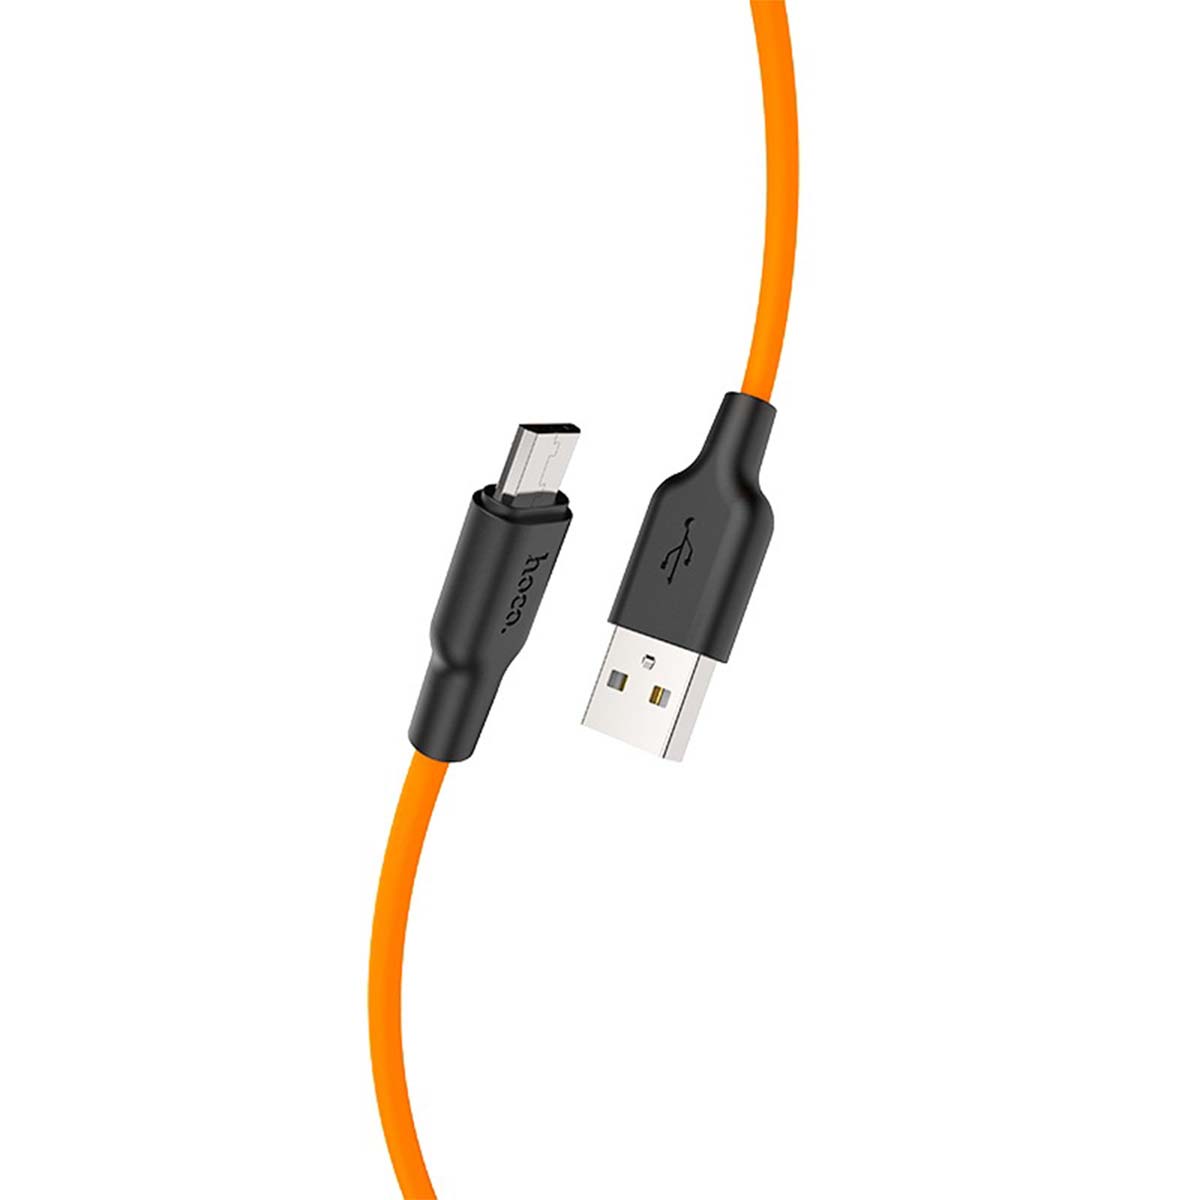 Кабель HOCO X21 Plus Micro USB, 2.4А, длина 1 метр, цвет черно оранжевый